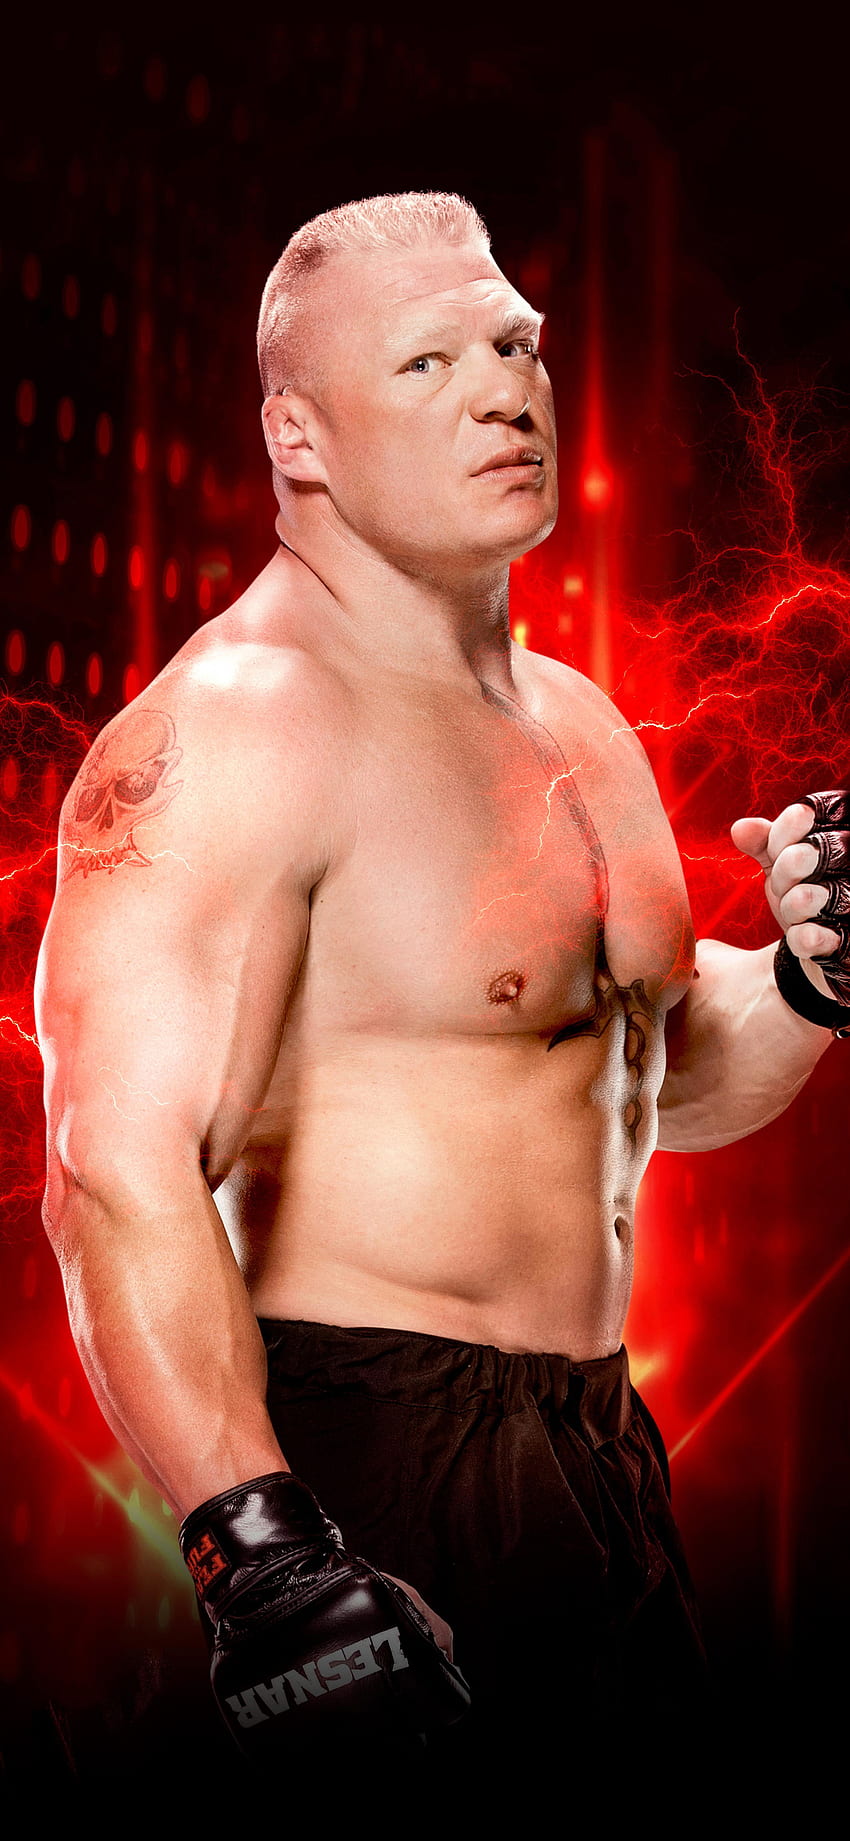 Brock Lesnar WWE 19 iPhone XS, iPhone 10, iPhone X , , Plano de fundo e , WWE Brock Lesnar Papel de parede de celular HD